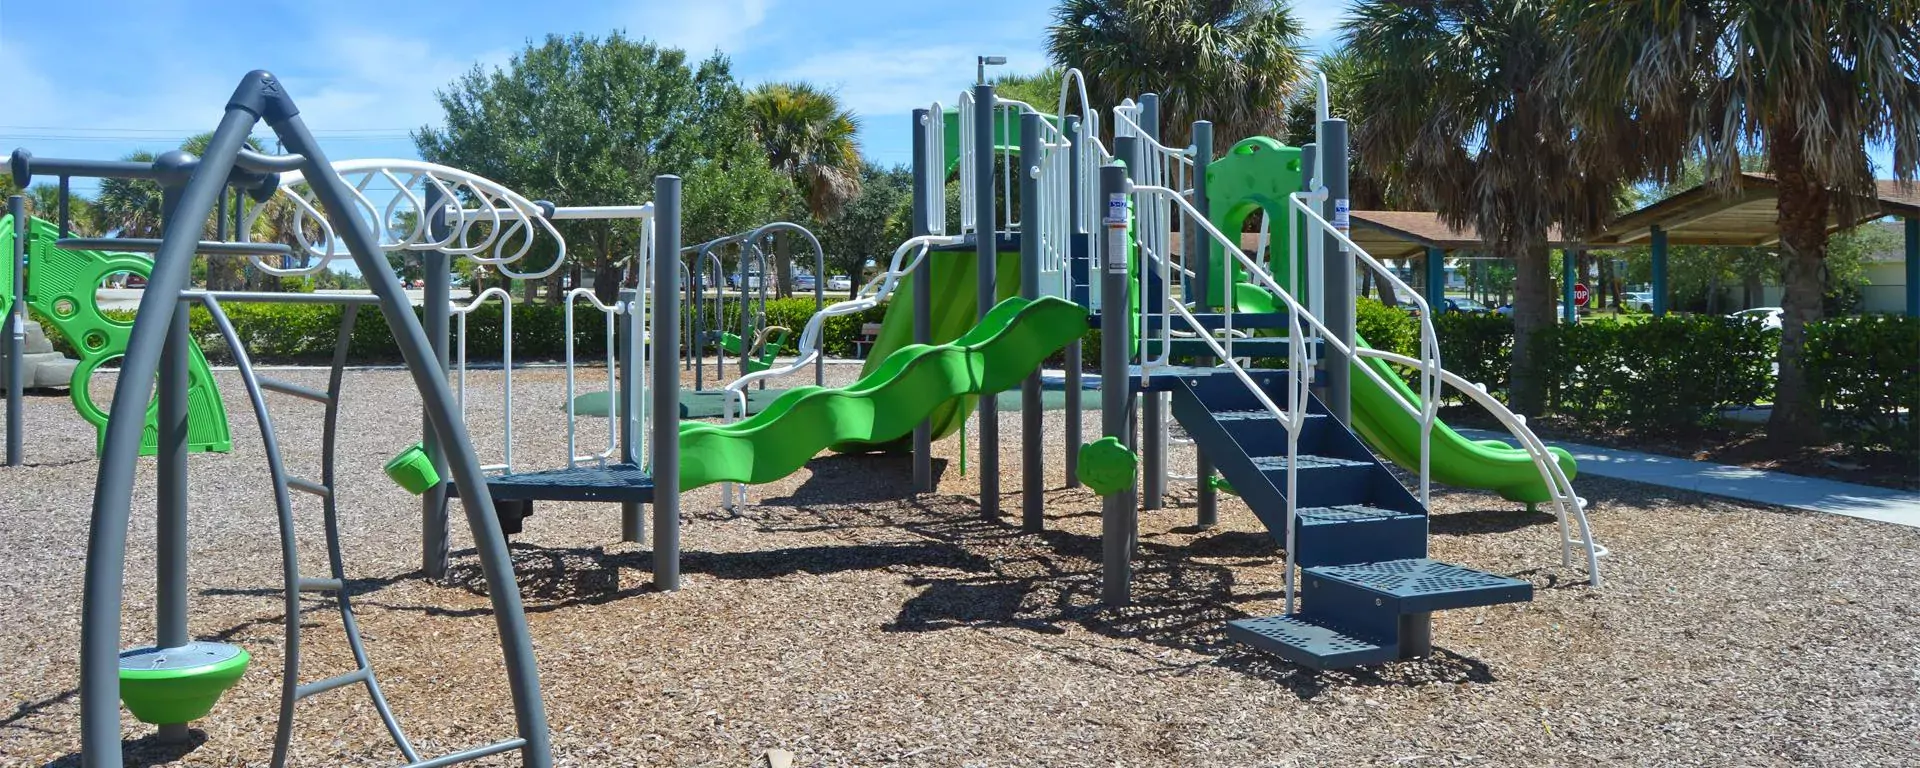 The children's playground at Langford Park